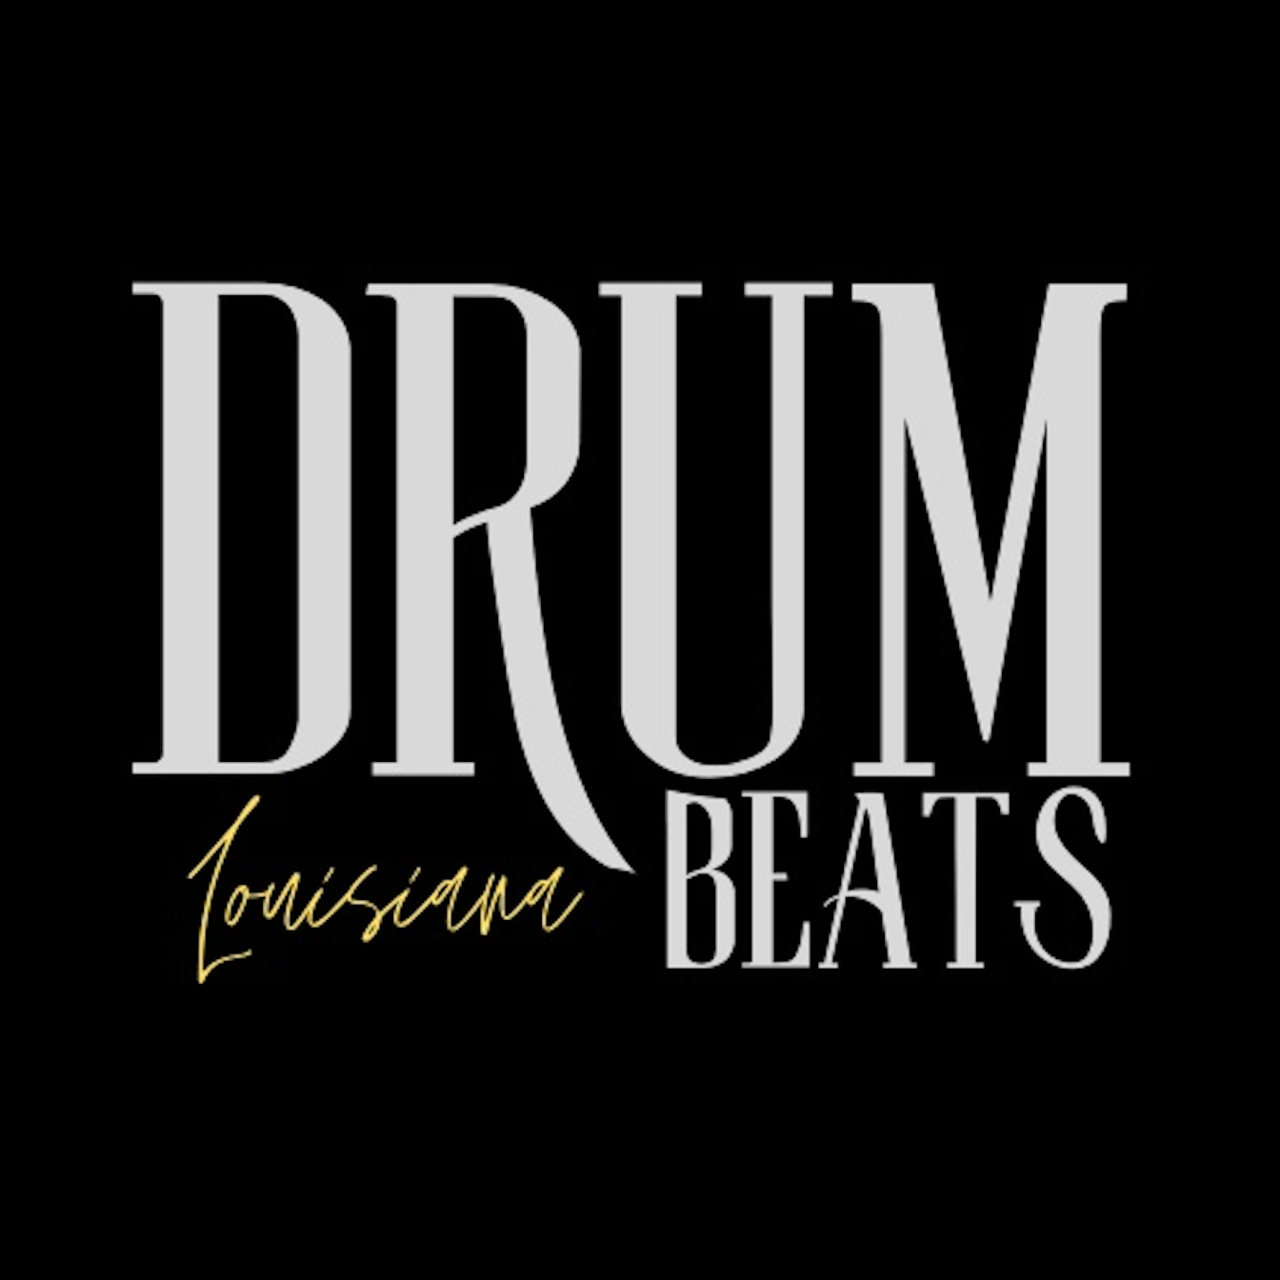 DrumBeats